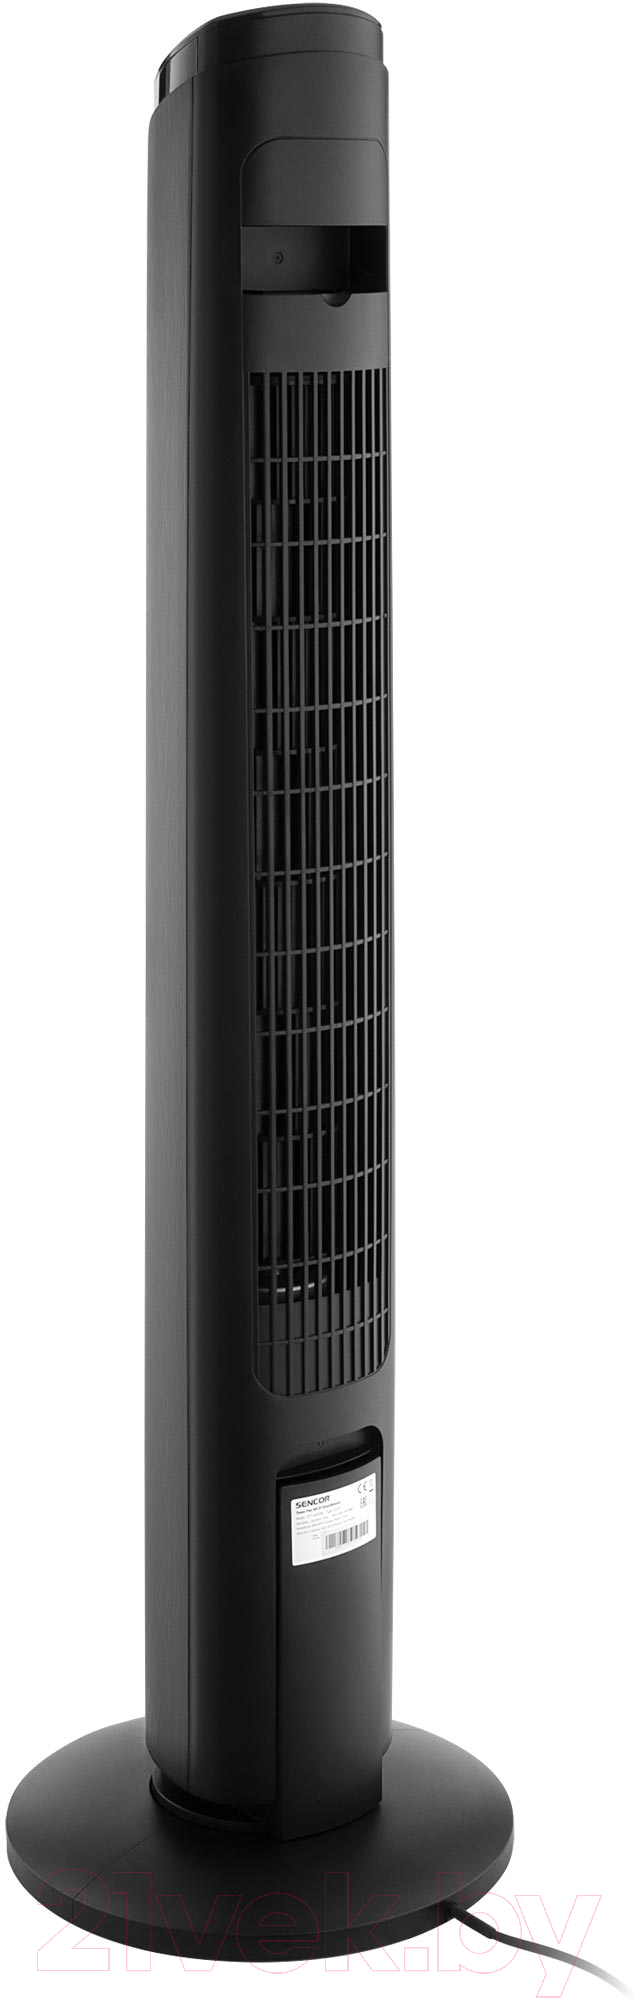 Вентилятор Sencor SFT 4207 BK